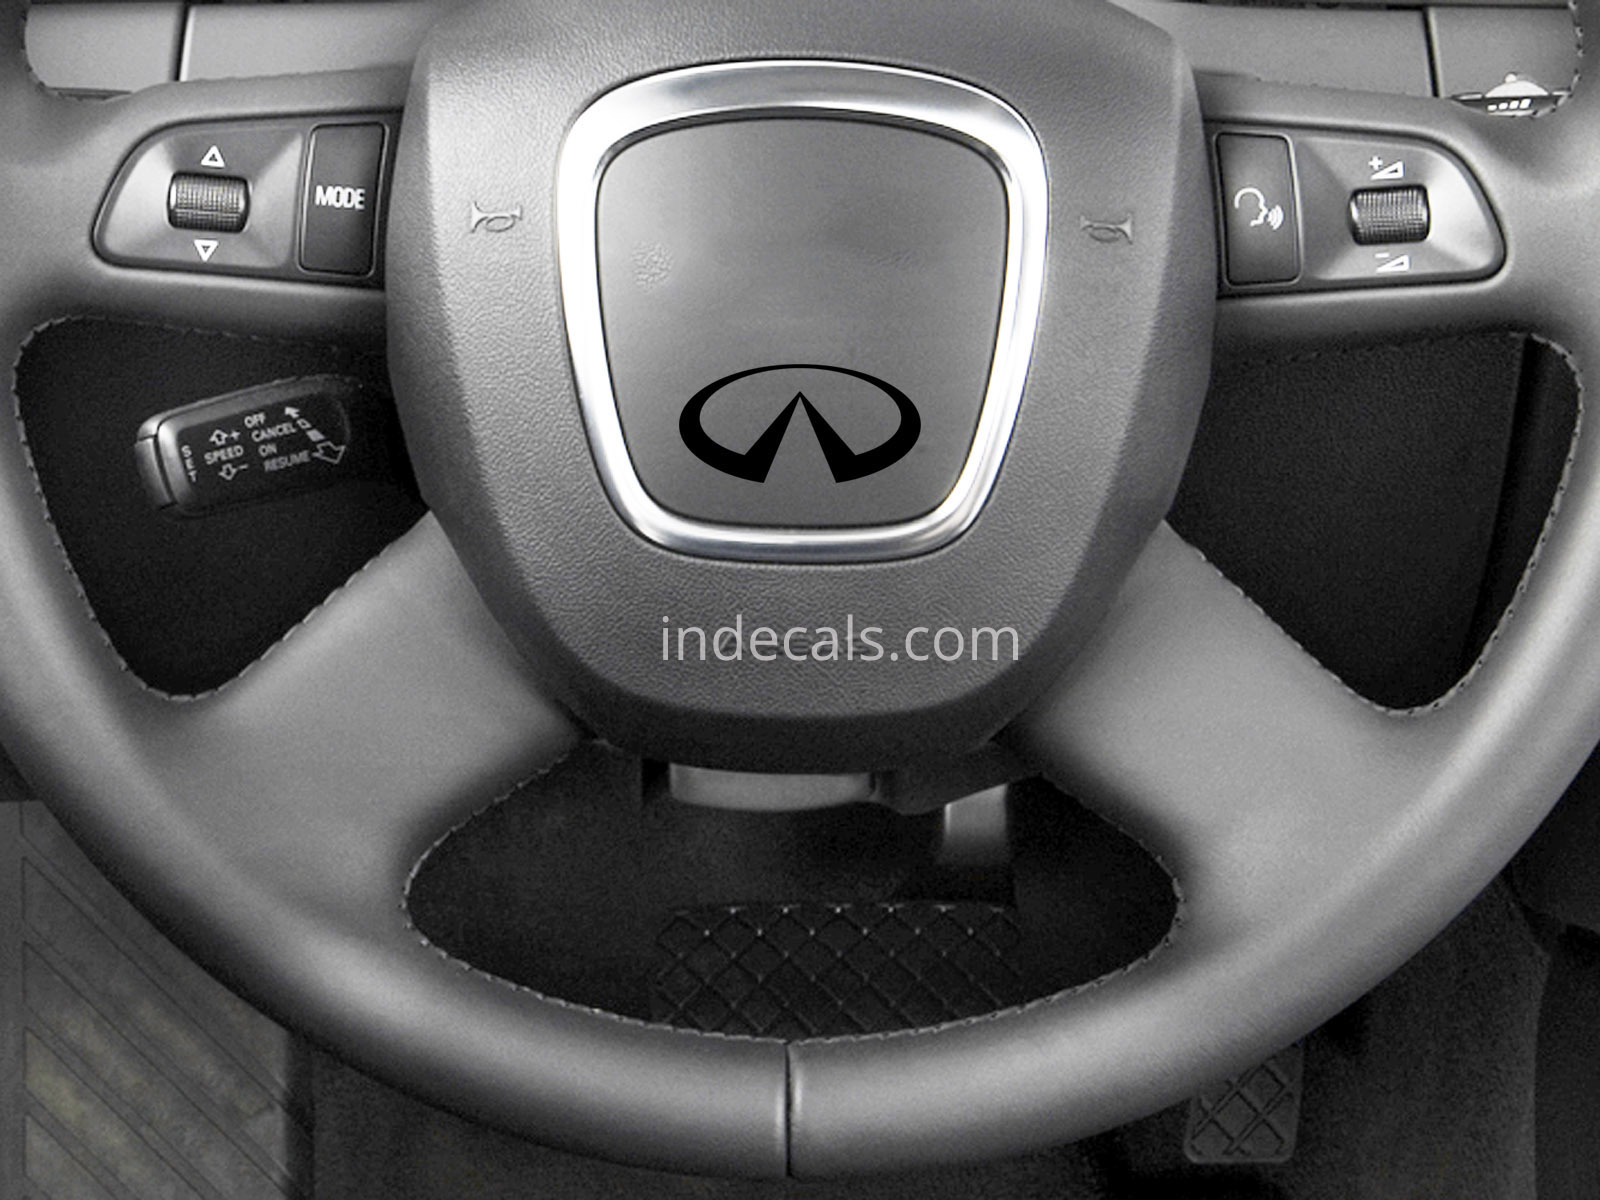 3 x Infiniti Stickers for Steering Wheel - Black